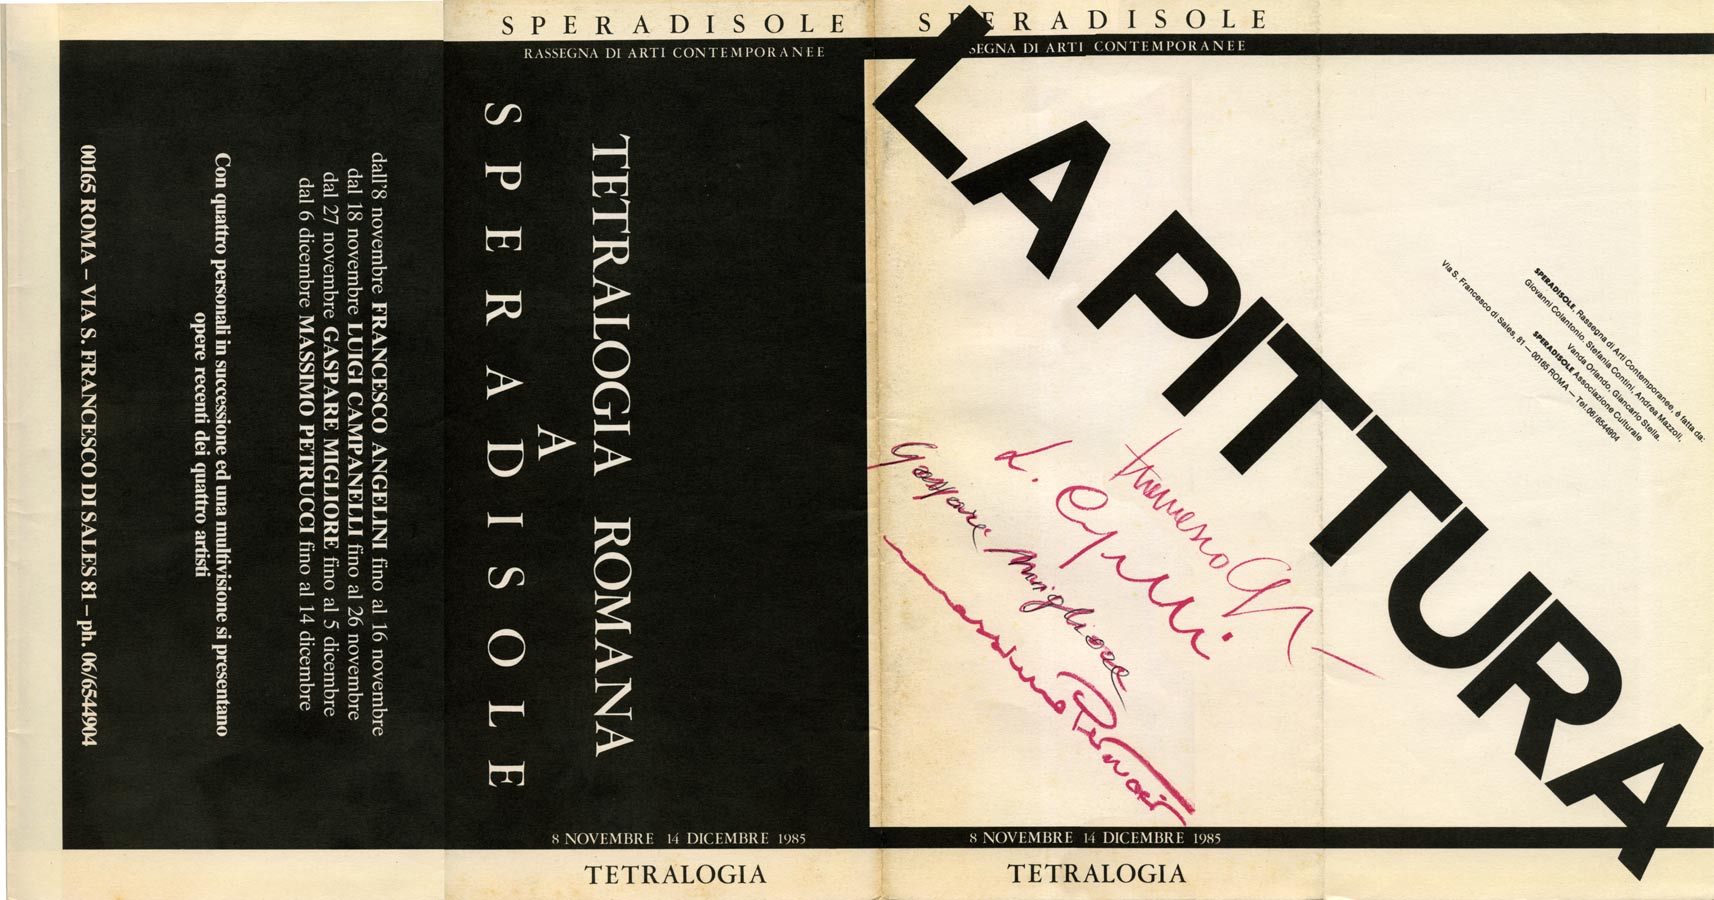 Mostra Tetralogia Romana Galleria Speradisole (1985)